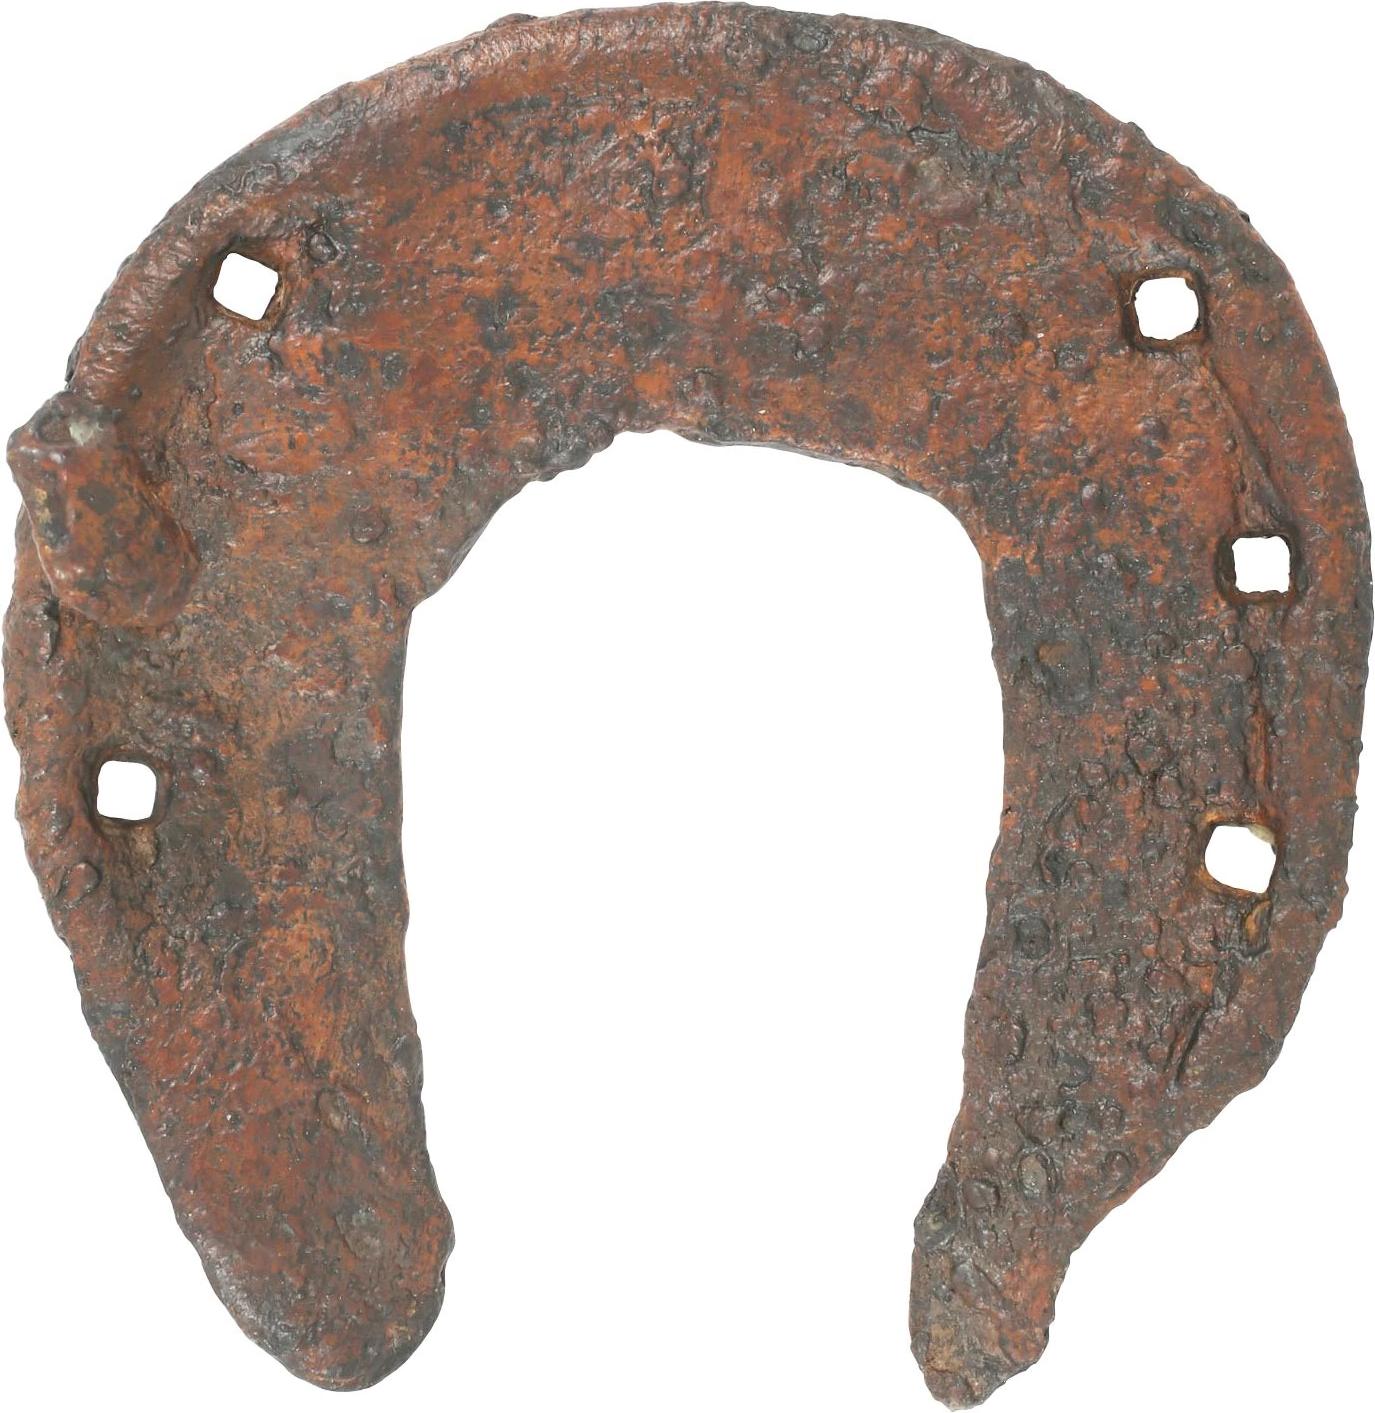 ANCIENT ROMAN HORSESHOE 3rd-4th CENTURY AD - Fagan Arms